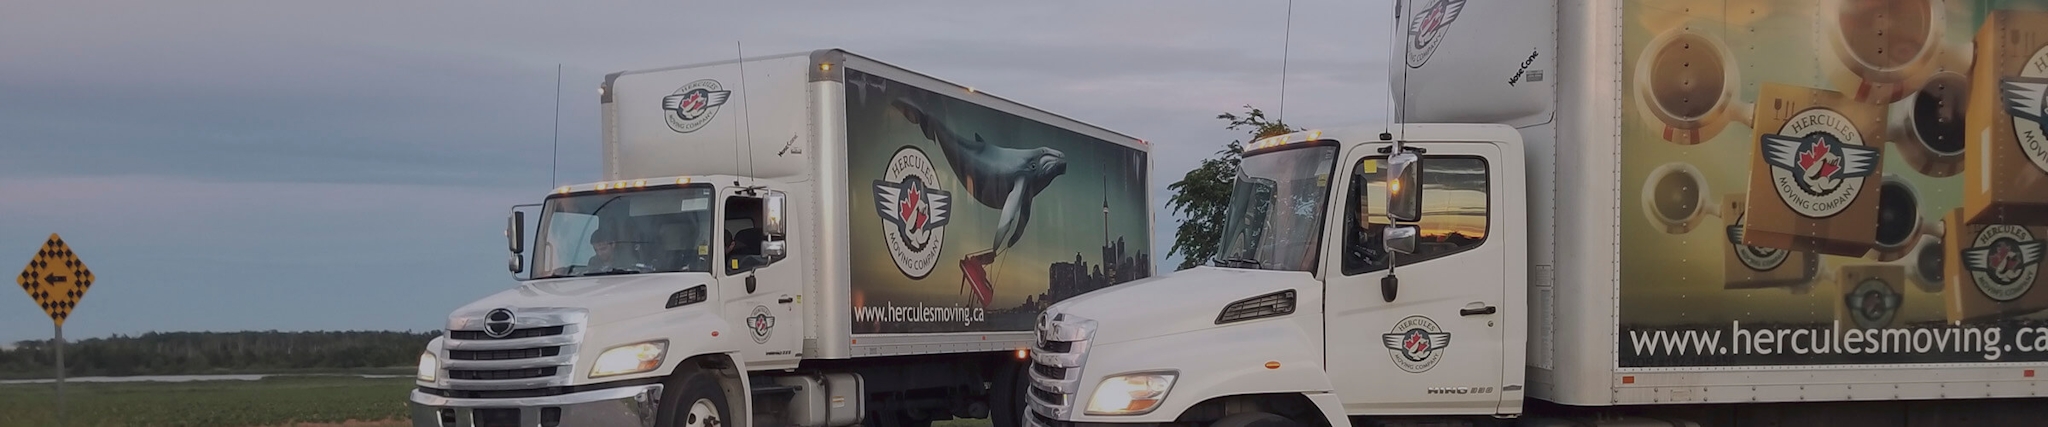 hercules moving company trucks